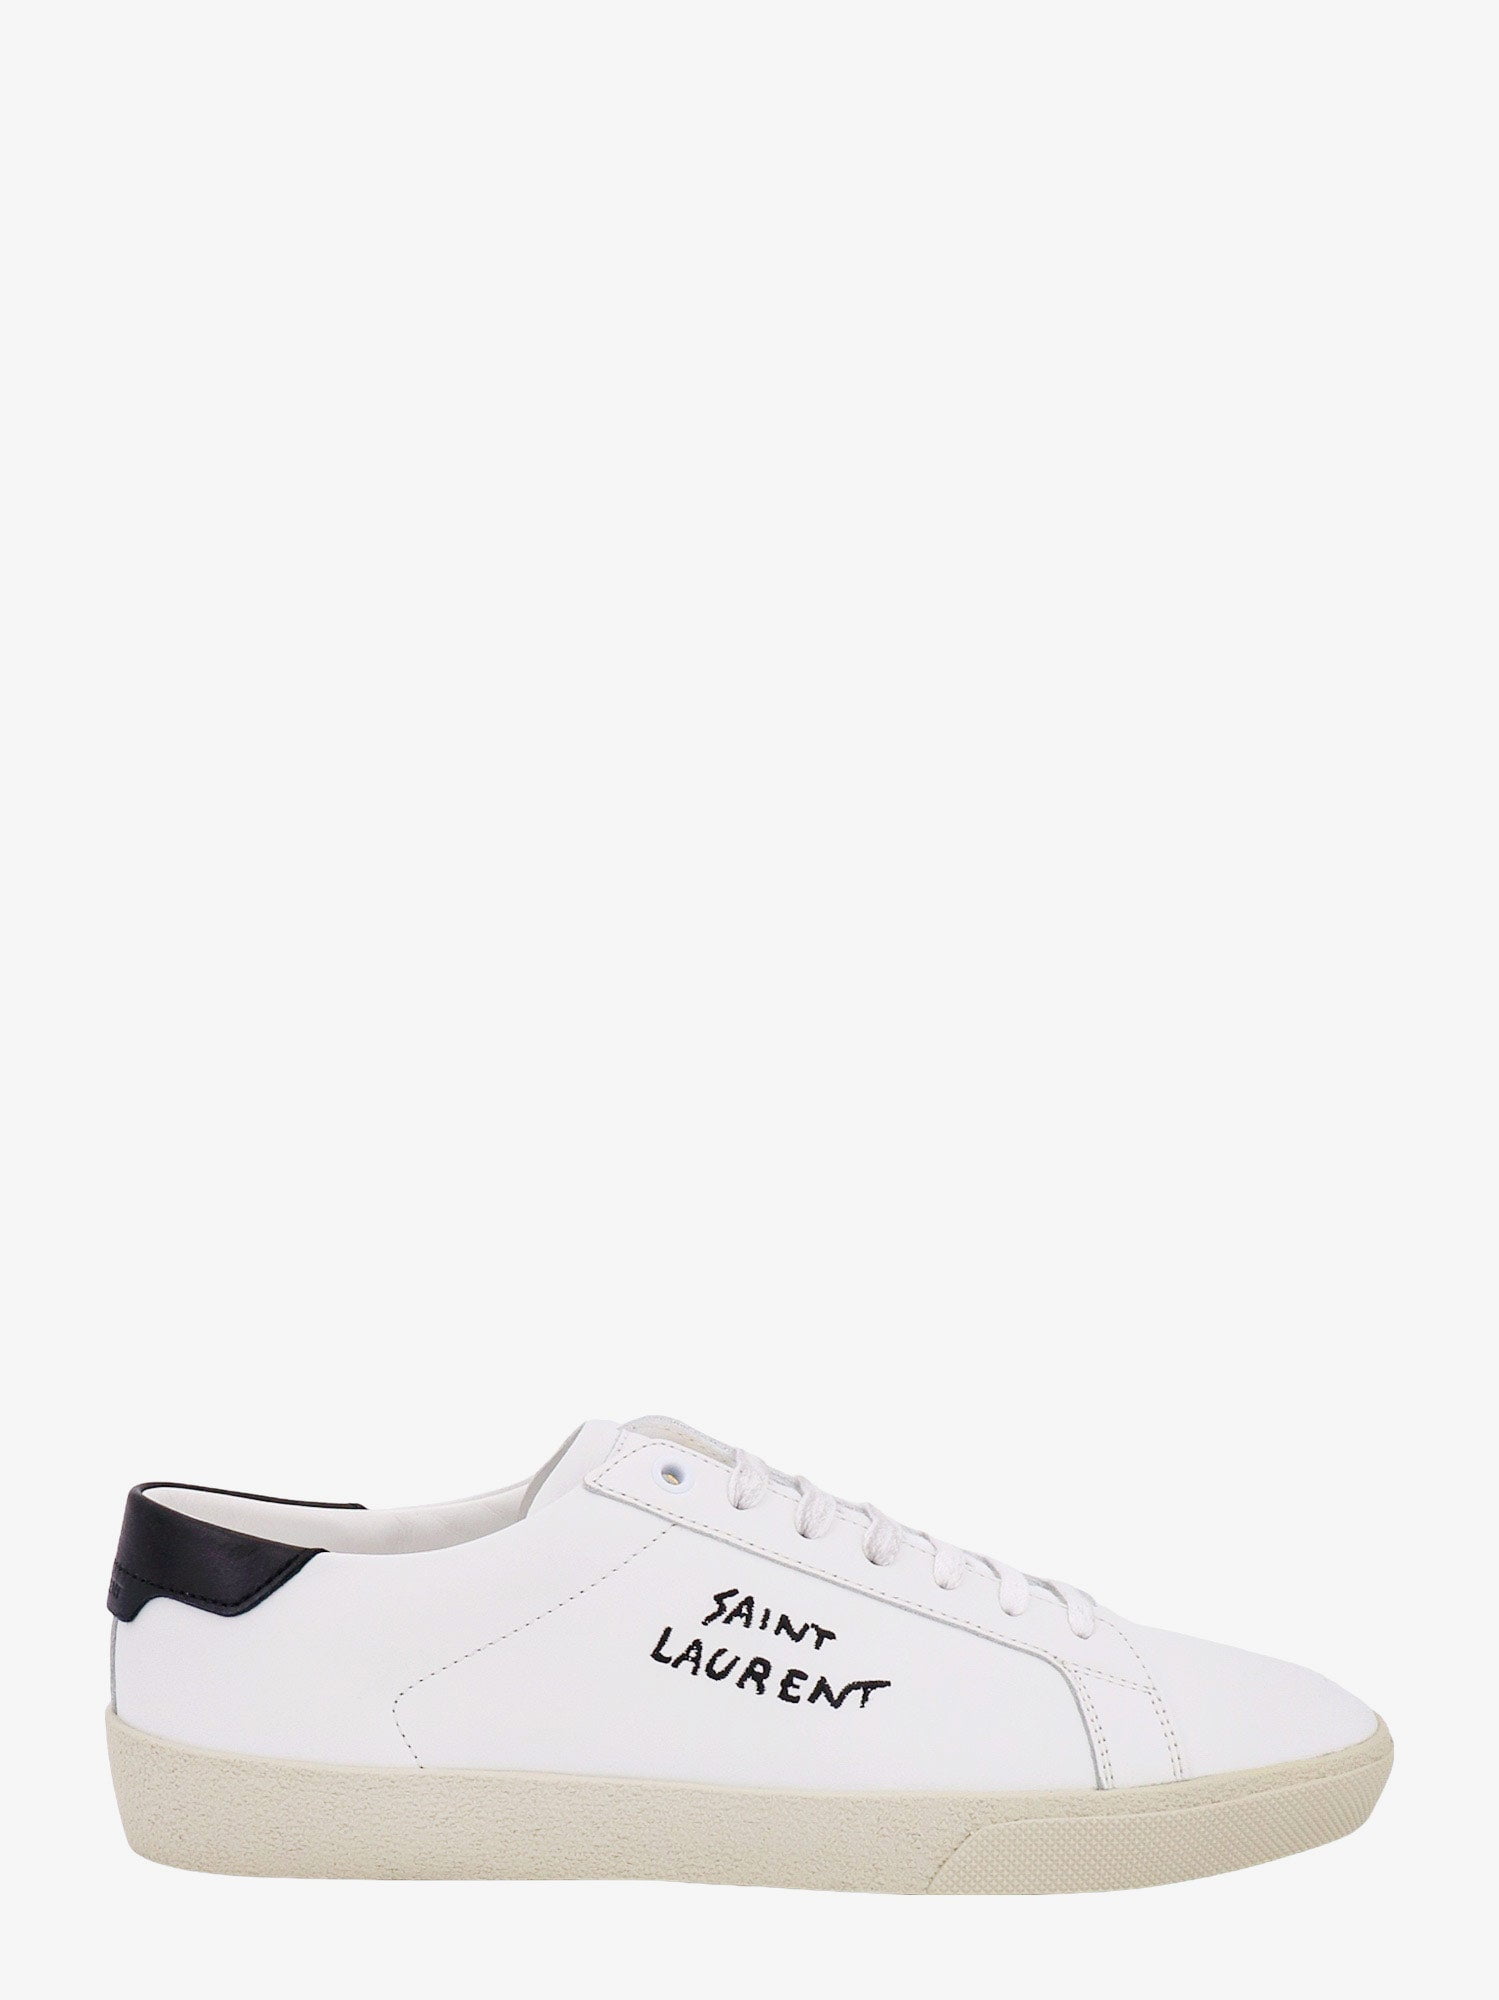 Saint Laurent Man Sl/06 Man White Sneakers - Walmart.com